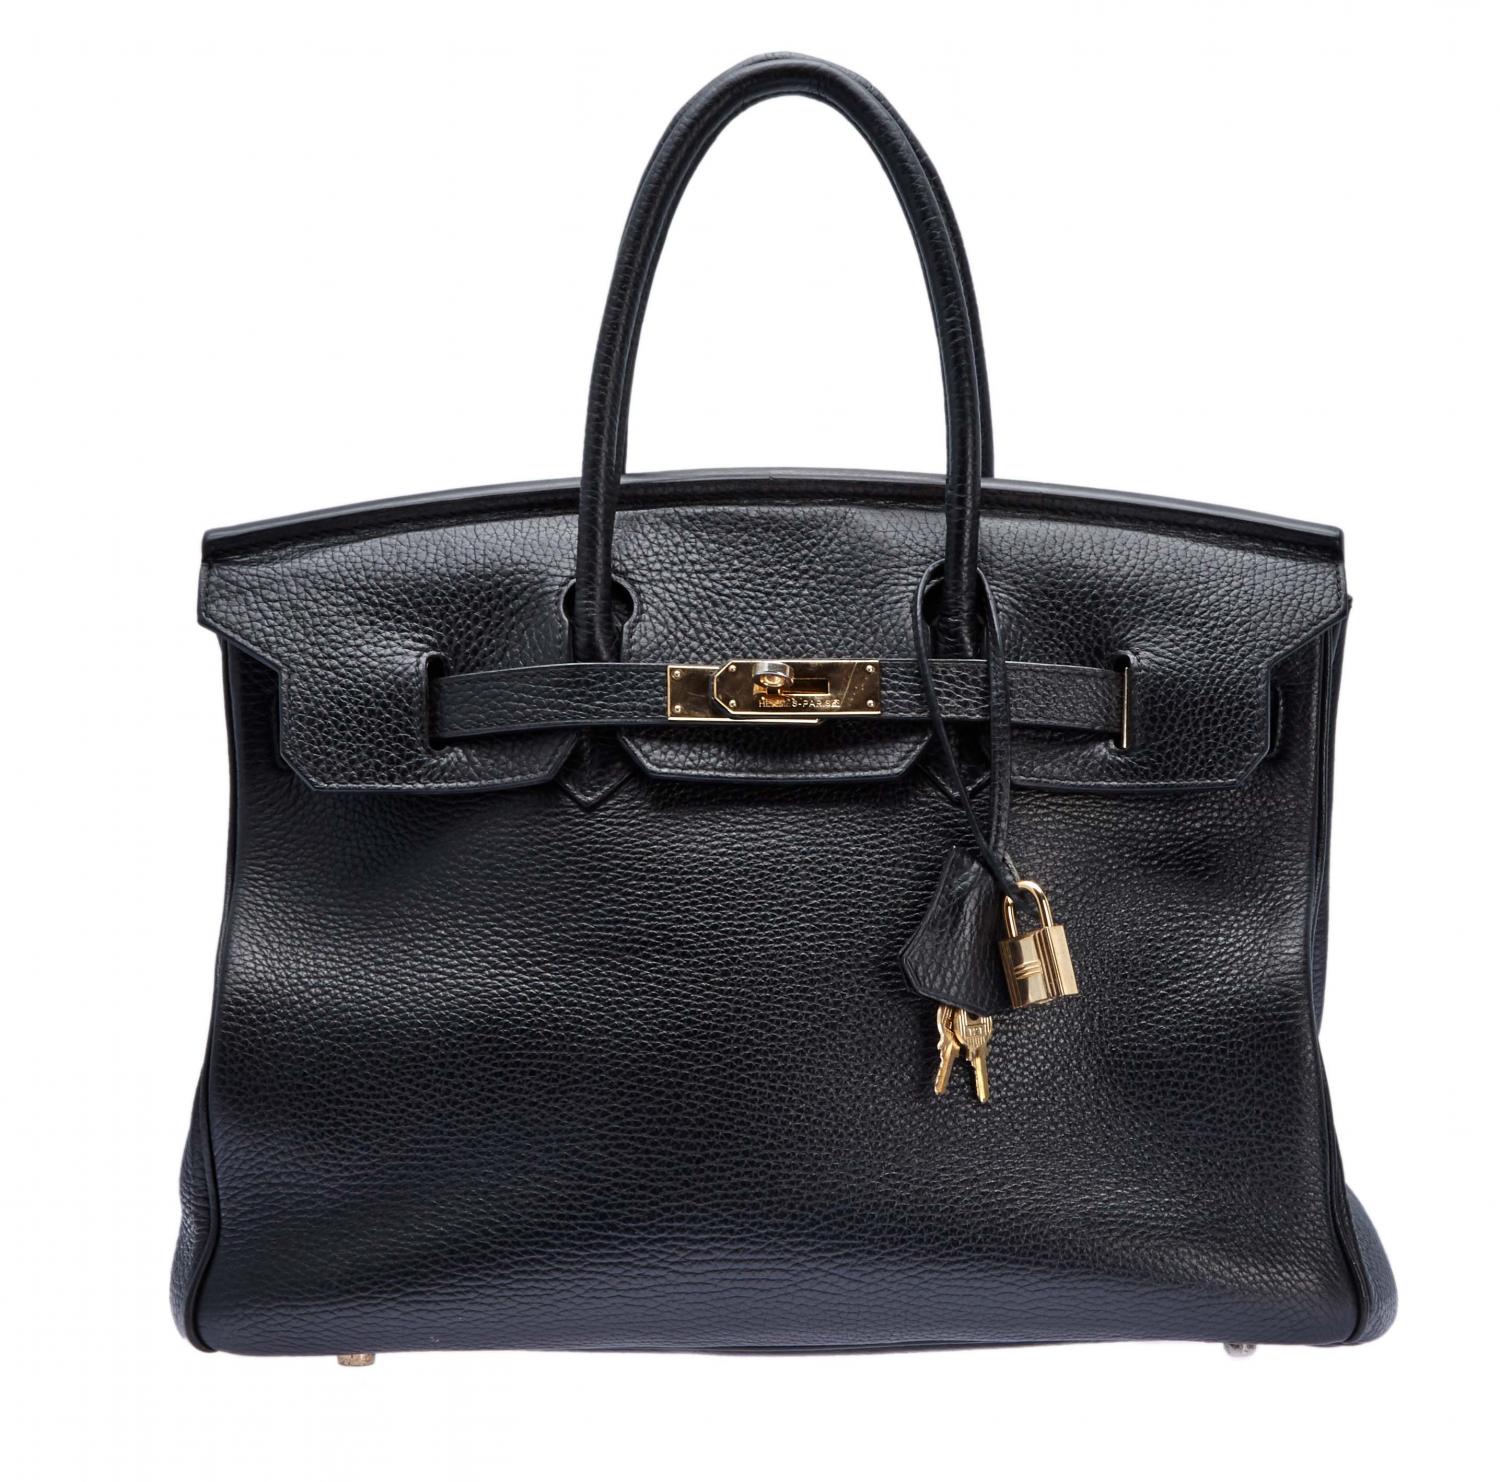 Hermes Birkin Handbag Price Estimate 8000 10000